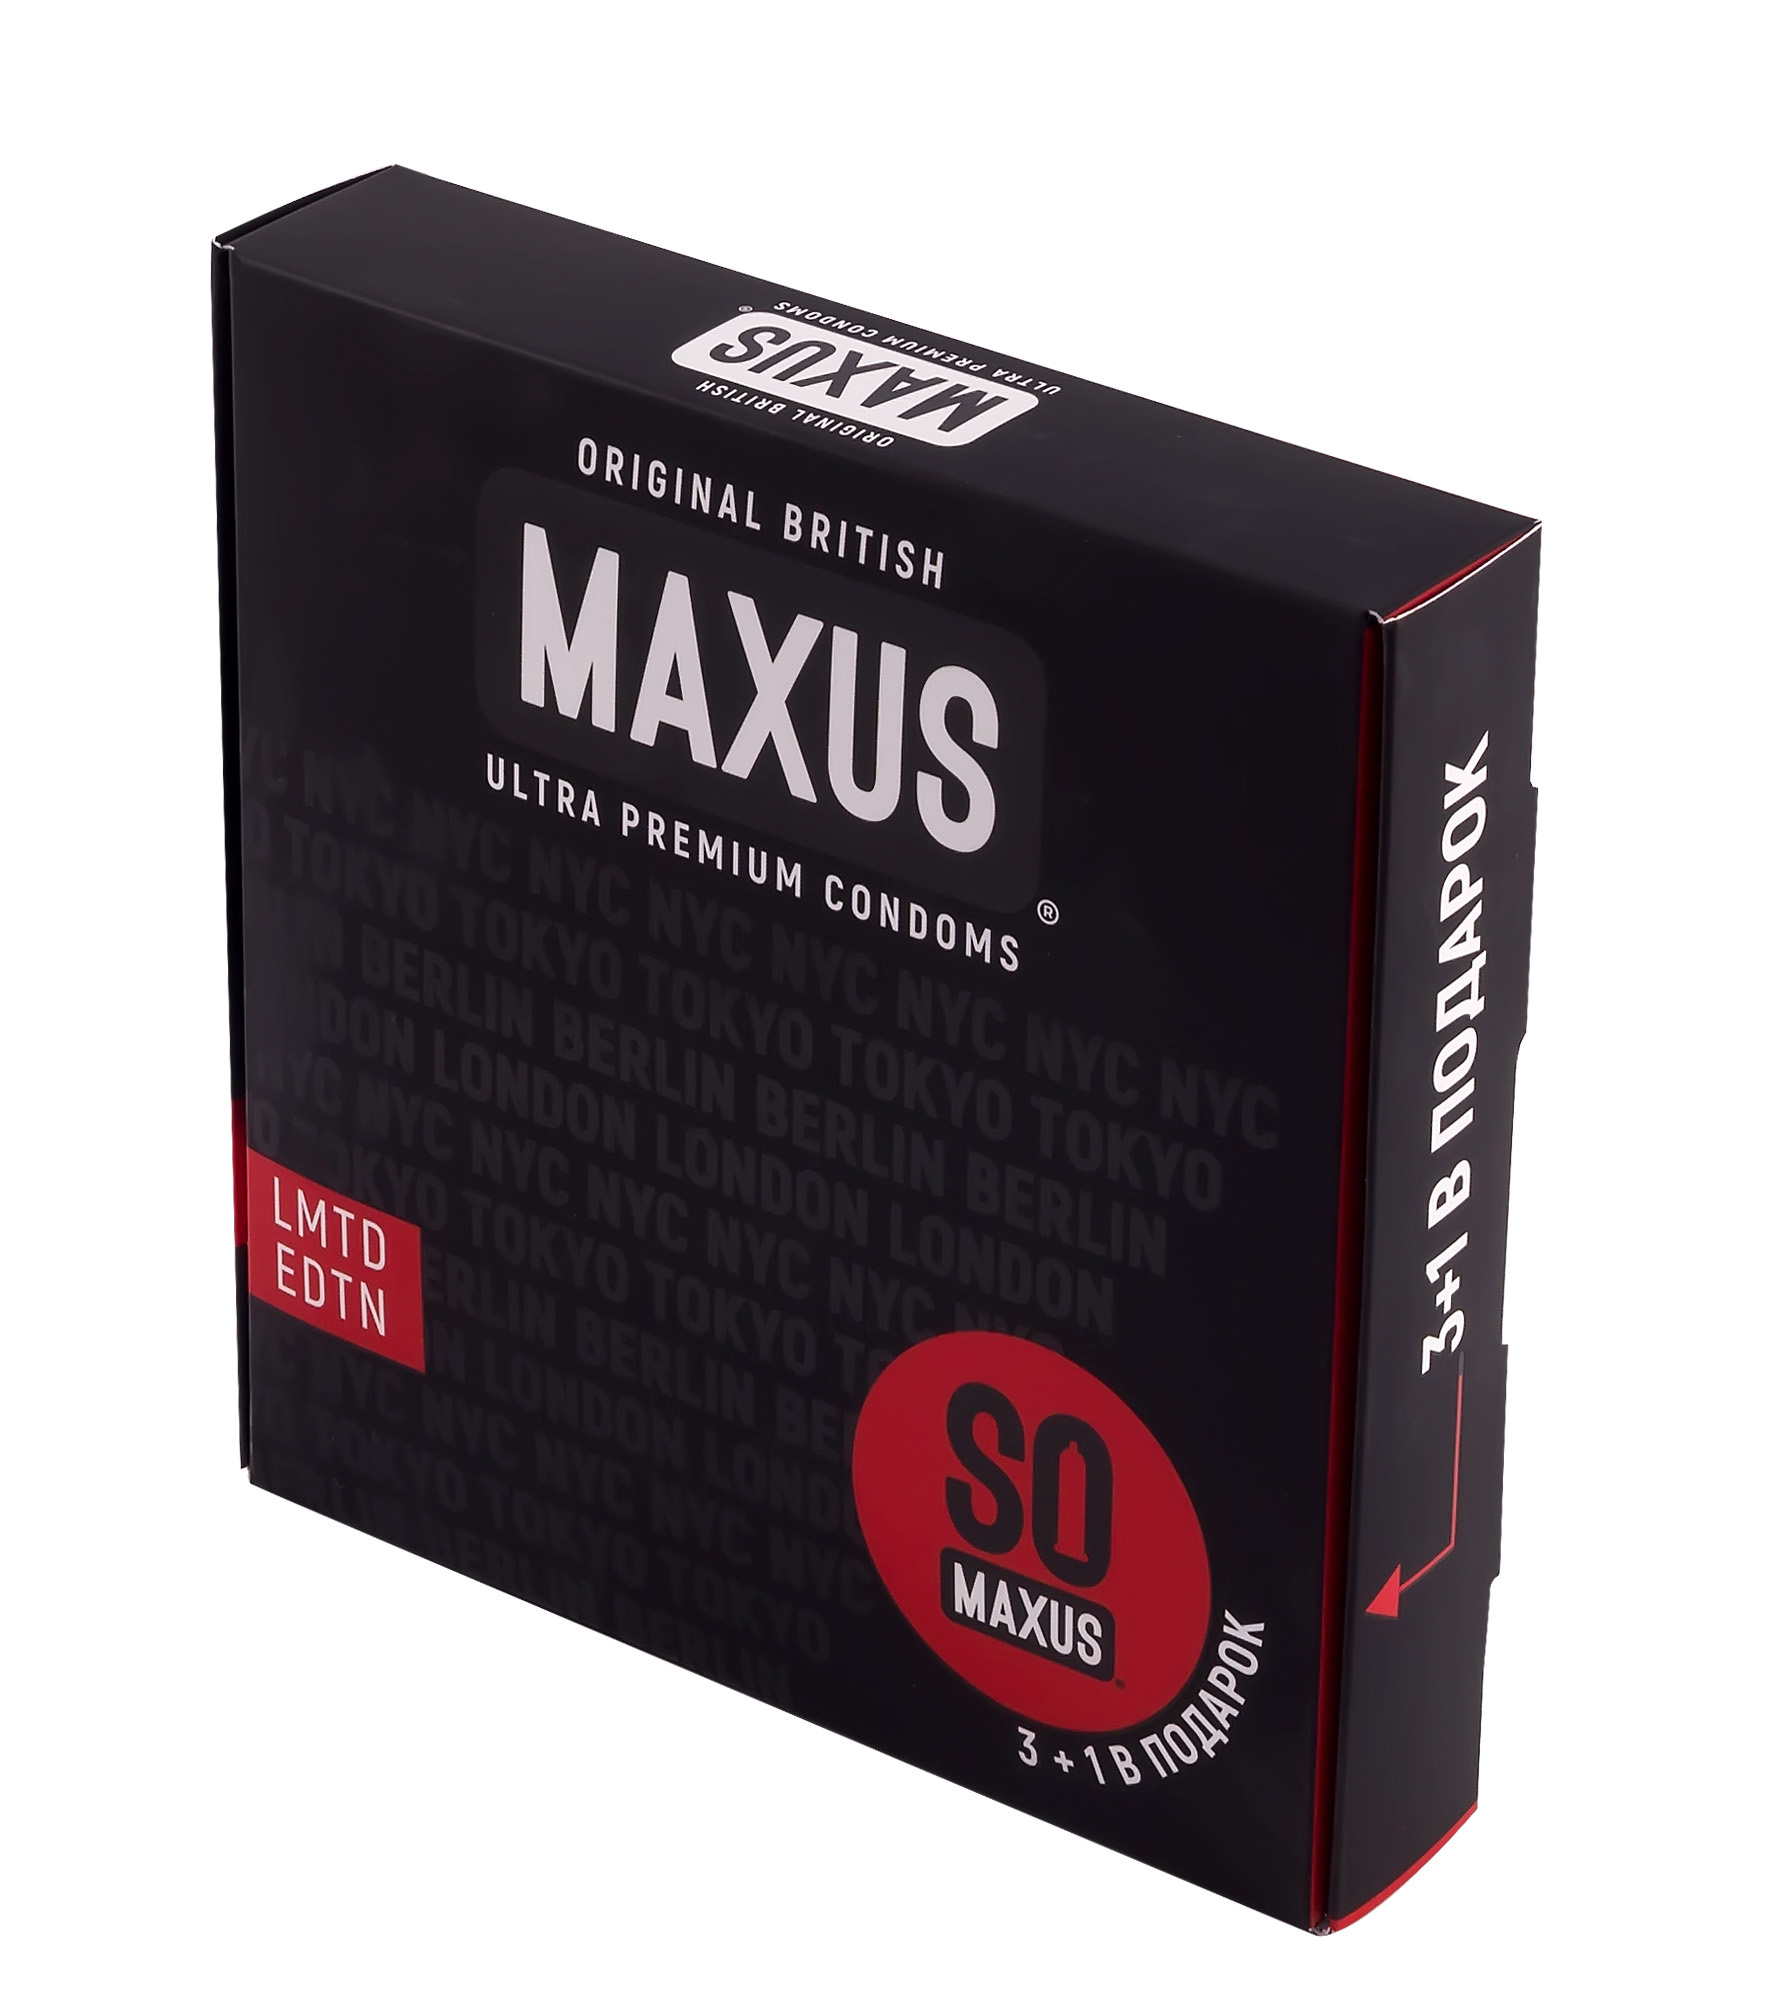 Презервативы в коробке Maxus Worldwide, 12 шт